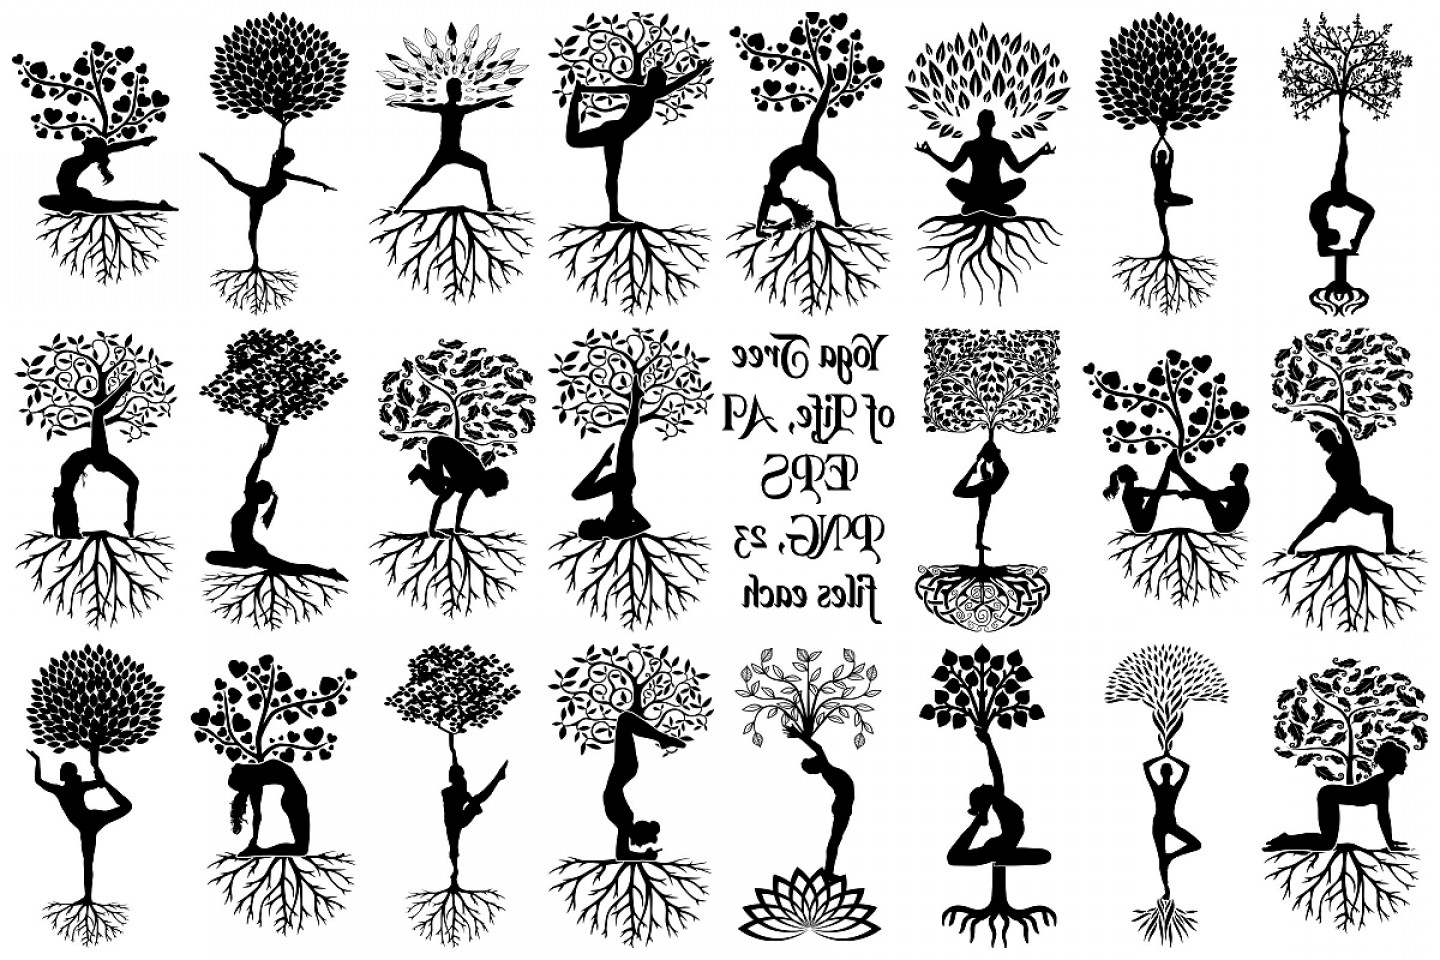 Yoga tree silhouettes.